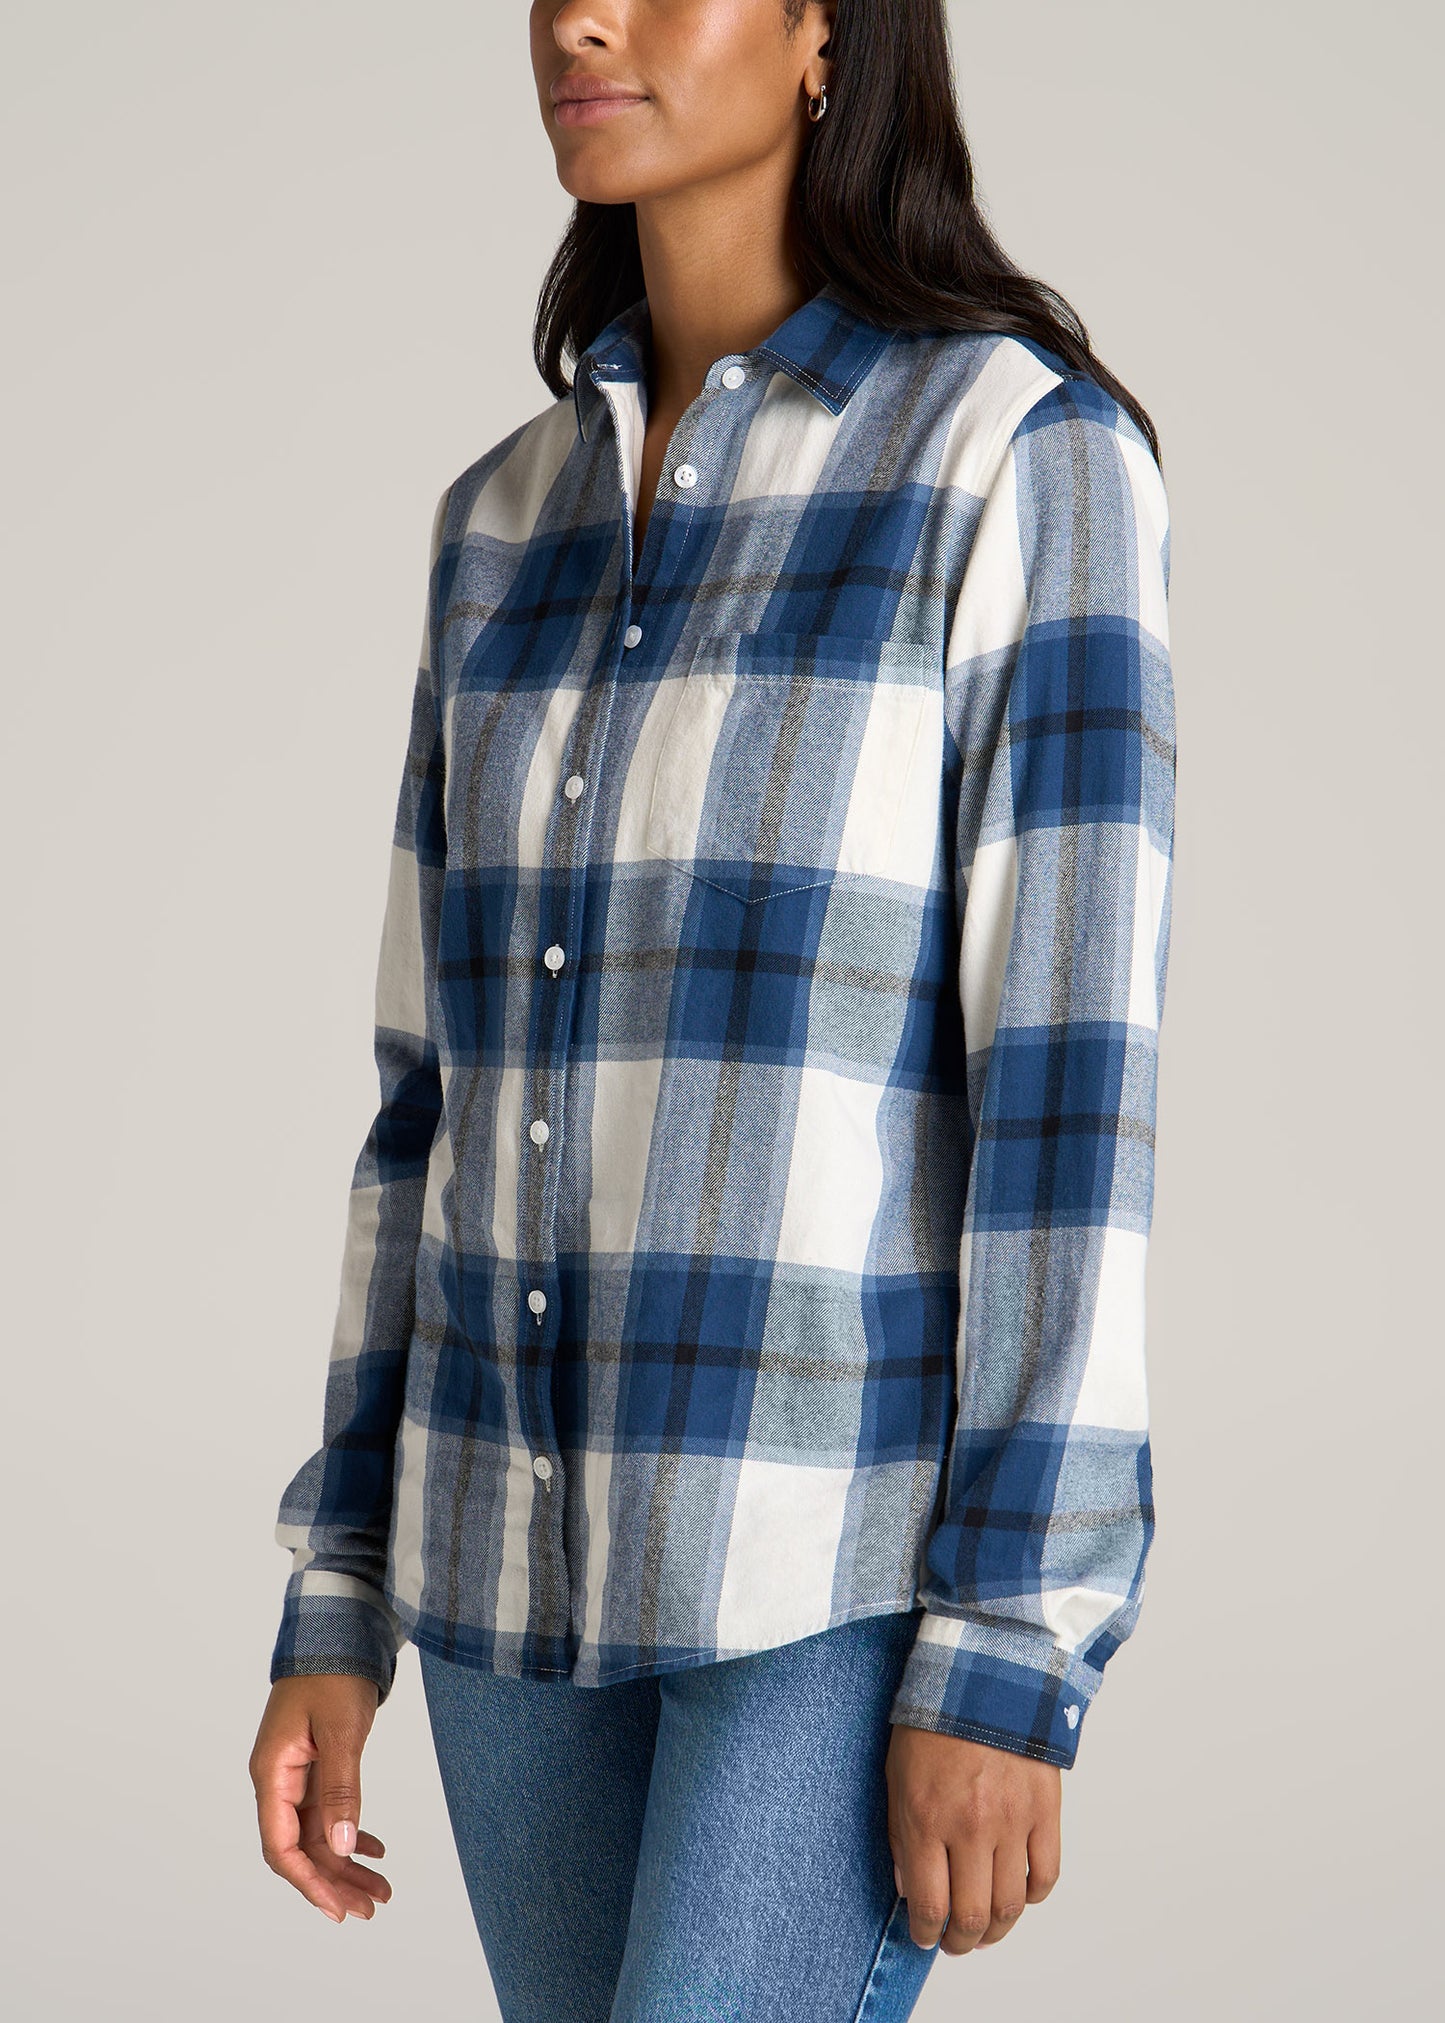 American-Tall-Women-Flannel-Button-up-Shirt-Oean-Blue-Navy-side